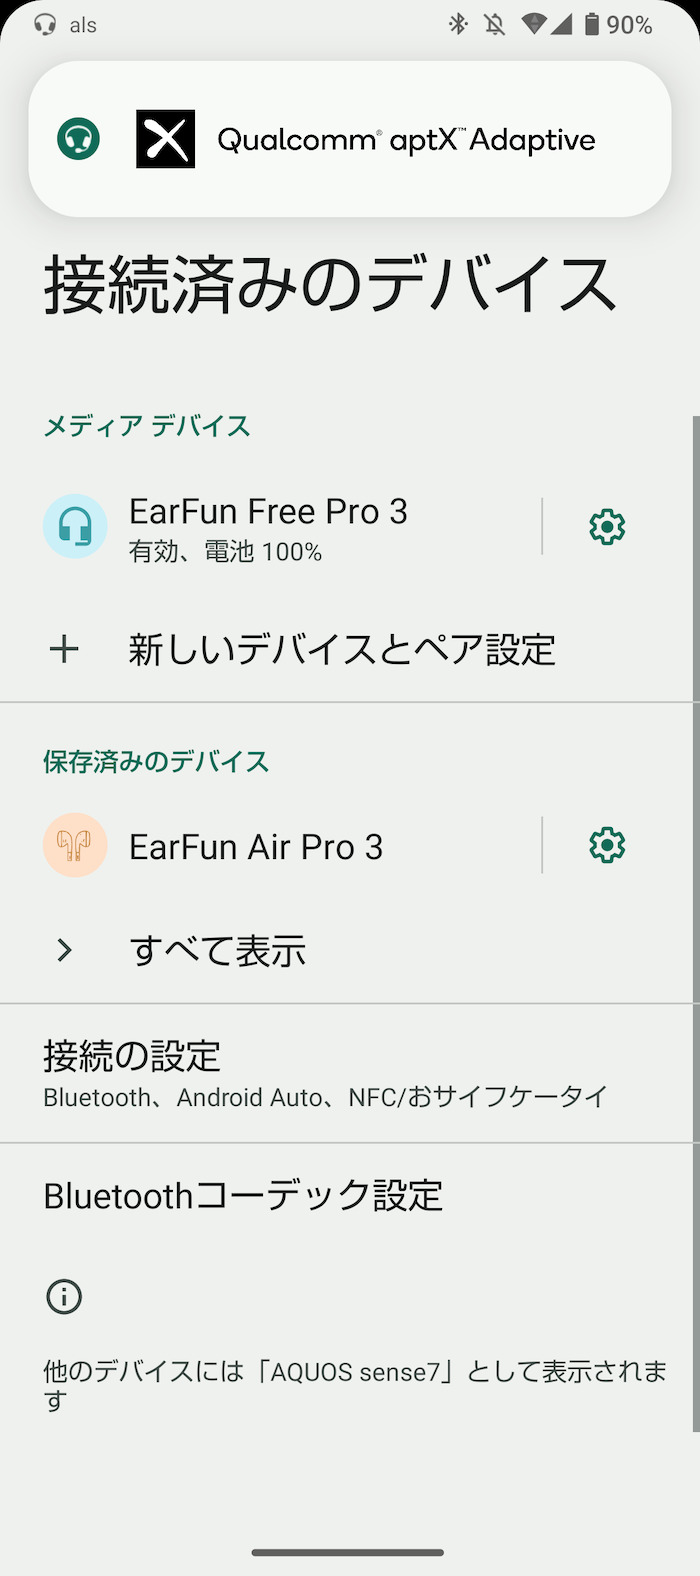 EarFun Free Pro 3はAptX Adaptive対応